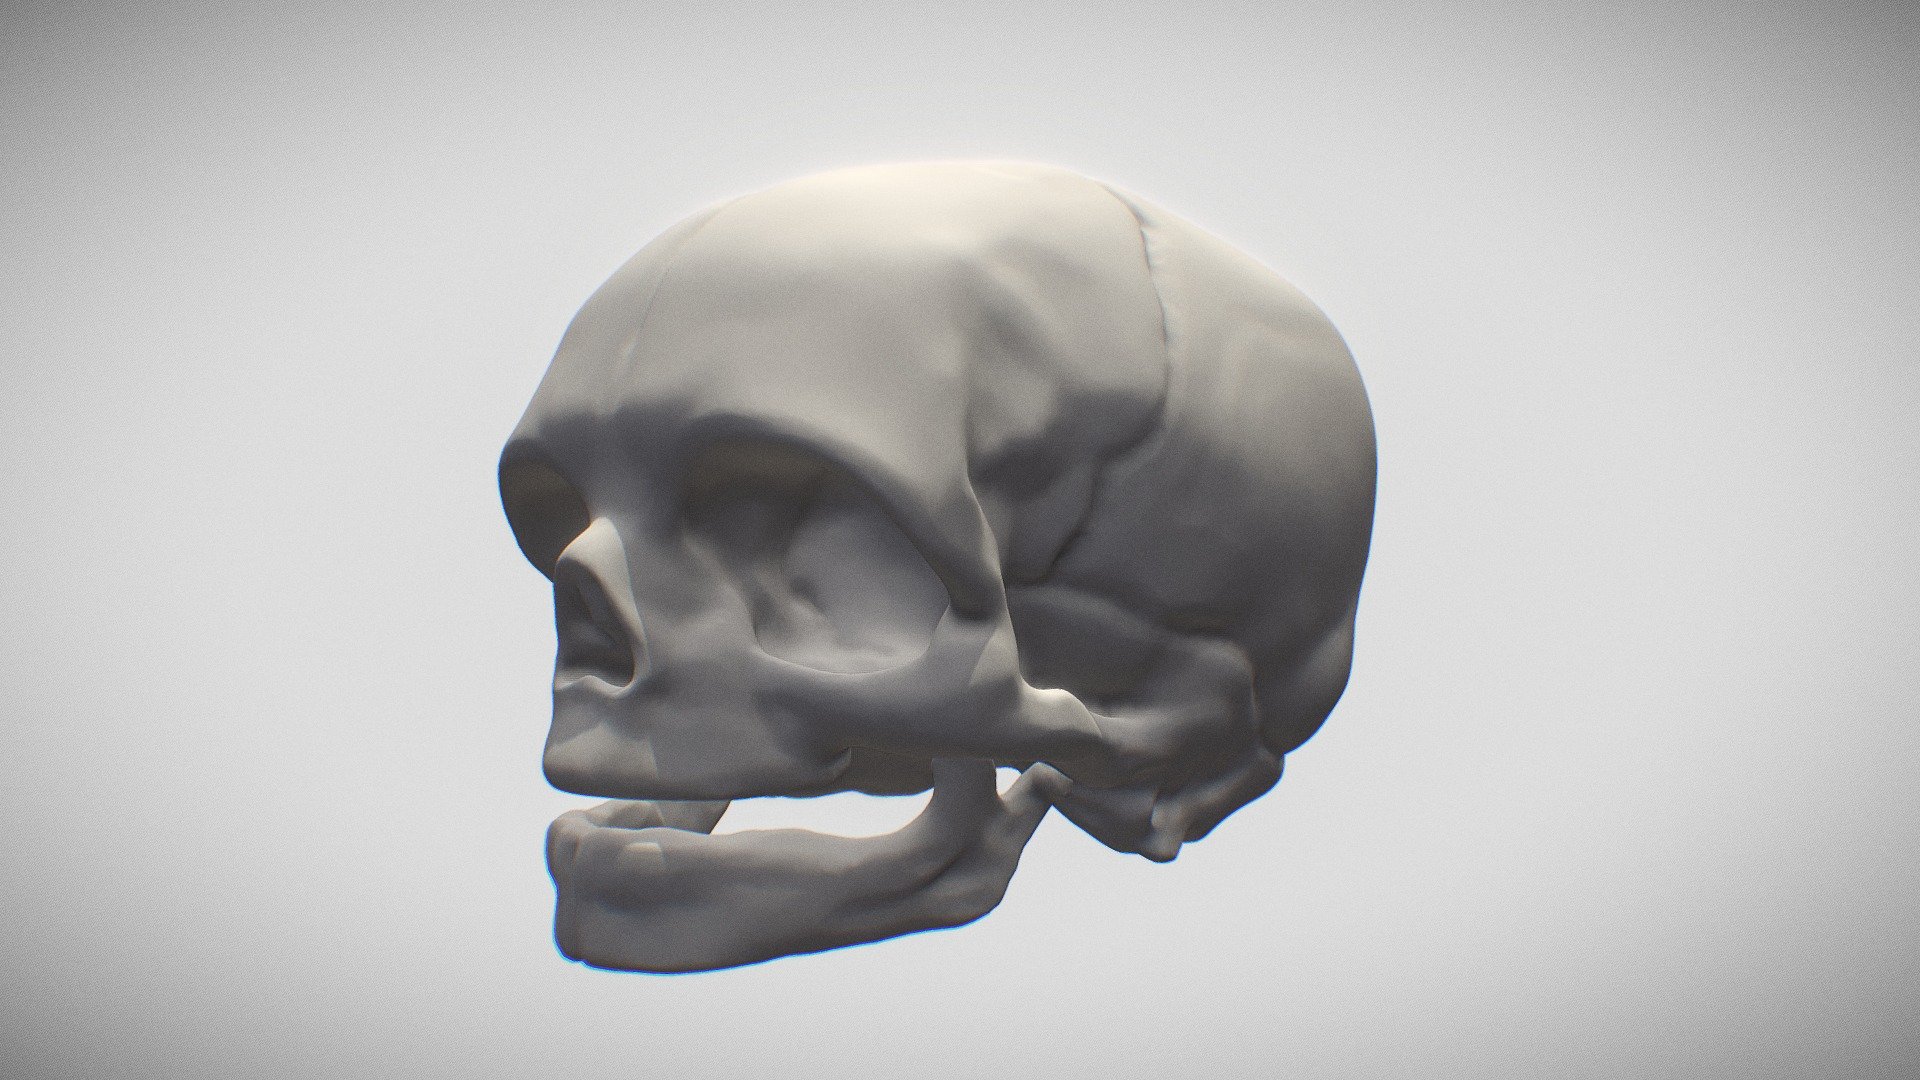 https://en.wikipedia.org/wiki/Skull

see more of my work on my website and instagram:

https://www.tomjohnsonart.co.uk/

https://www.instagram.com/tomjohnsonart/ - Skull: Human Infant - Buy Royalty Free 3D model by Tom Johnson (@Brigyon) 3d model